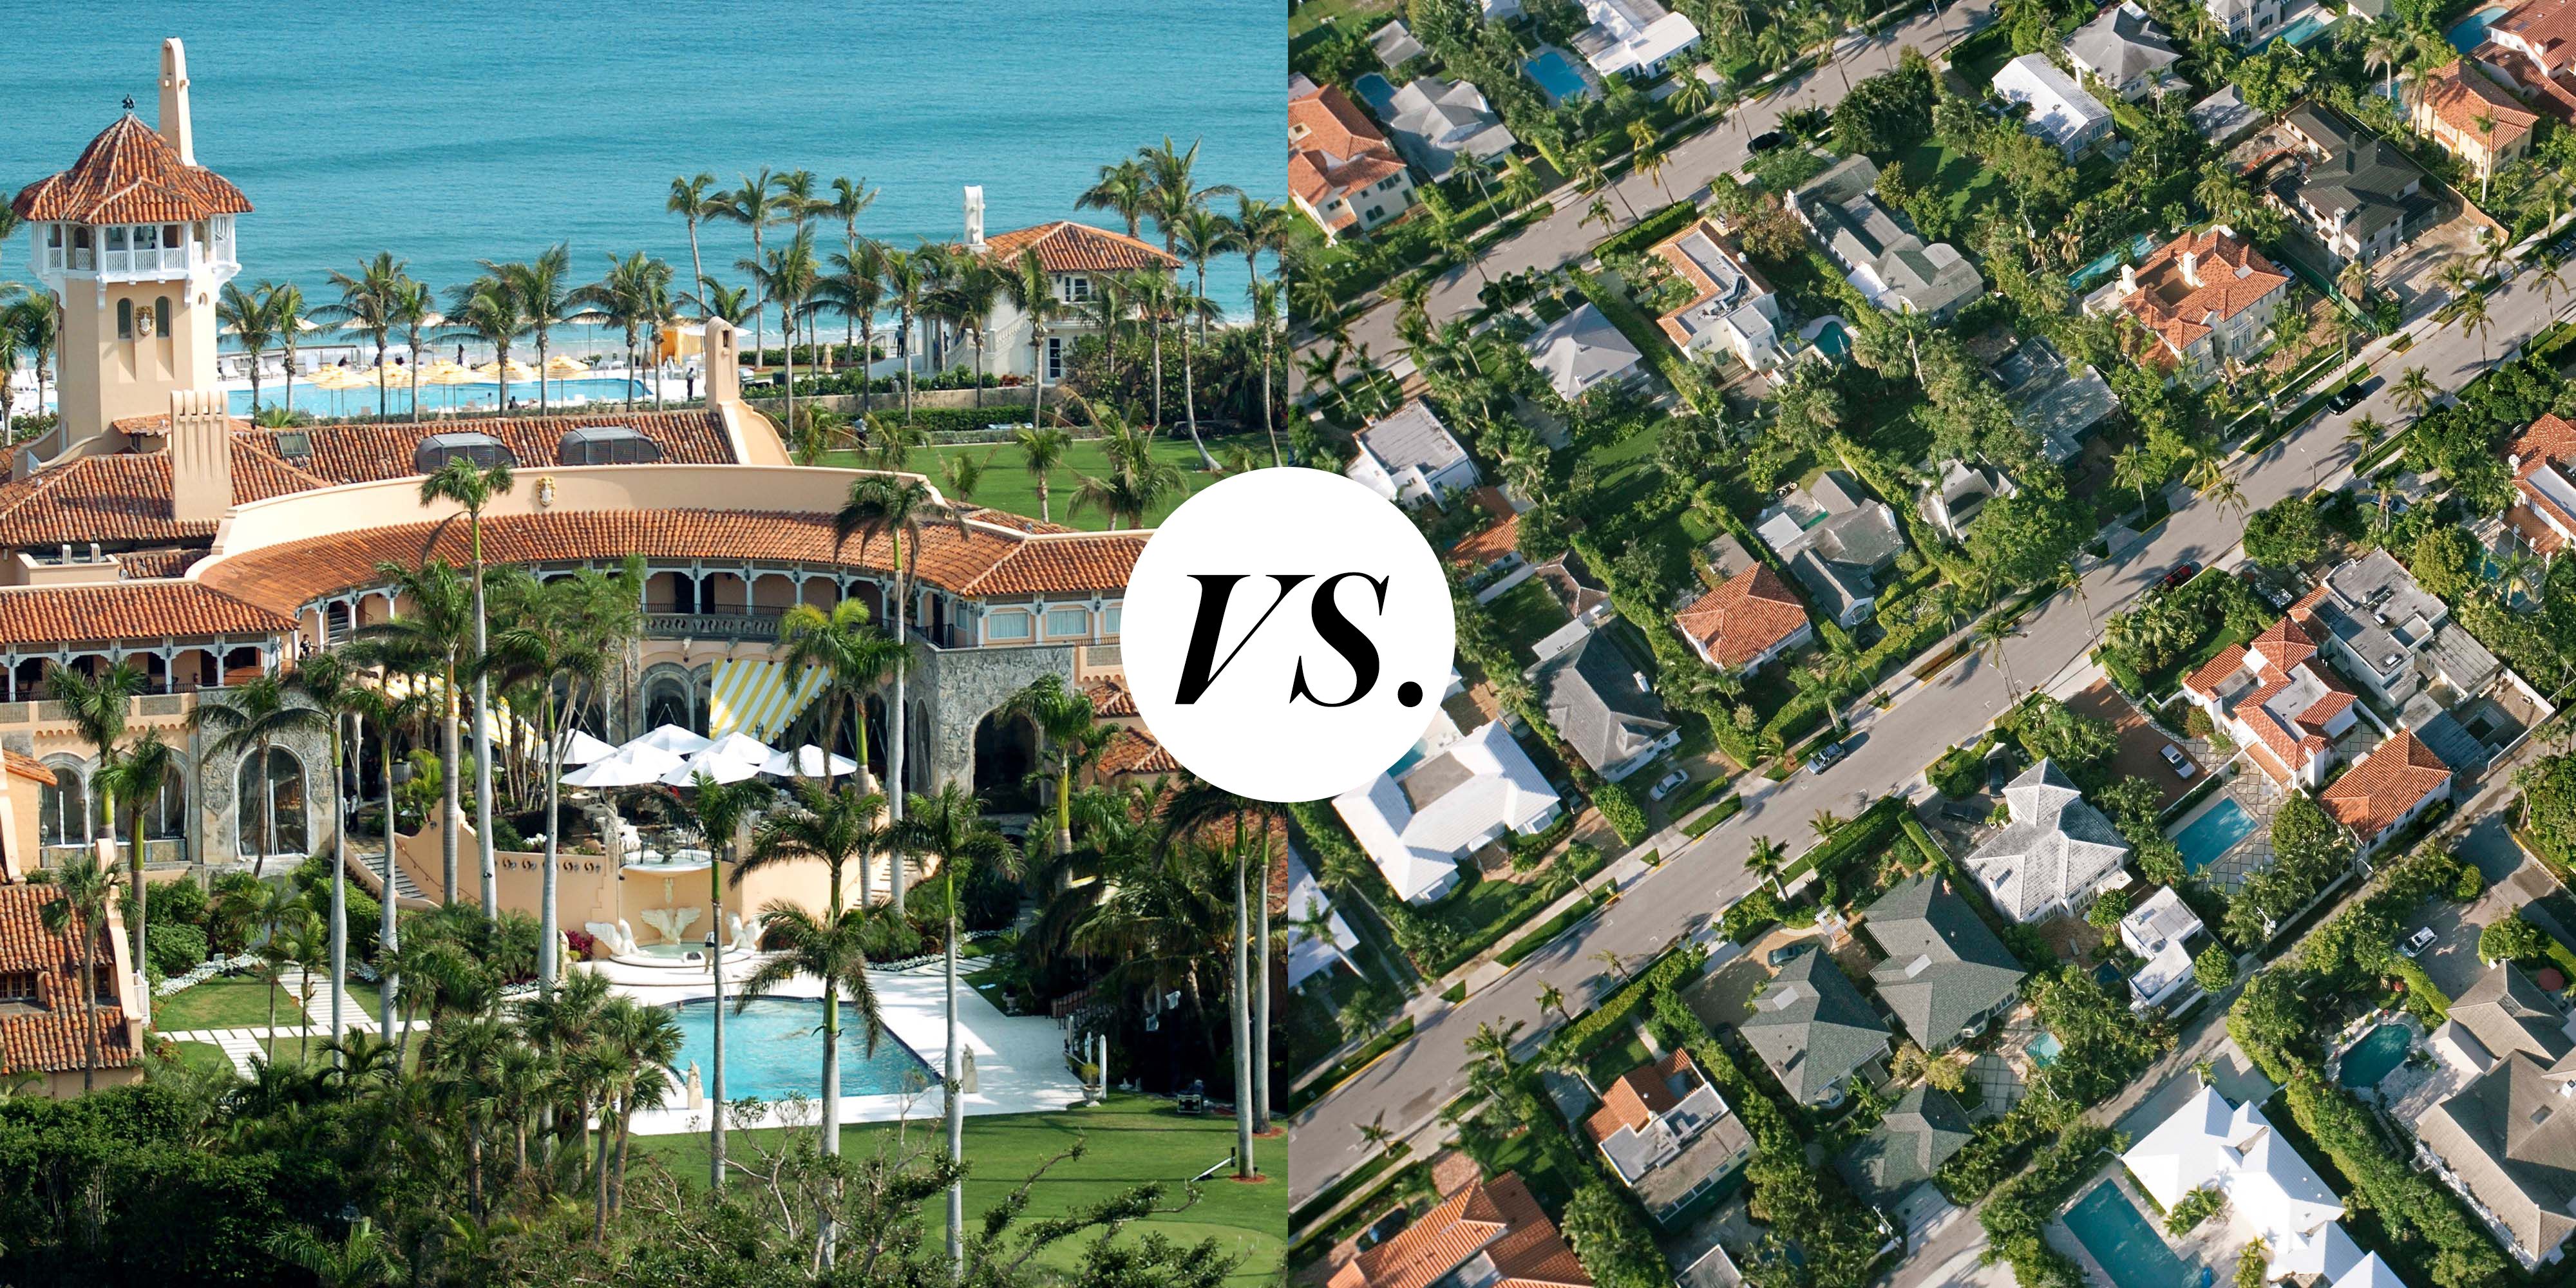 Palm Beach vs. West Palm Beach - Tinsley Mortimer Explains the